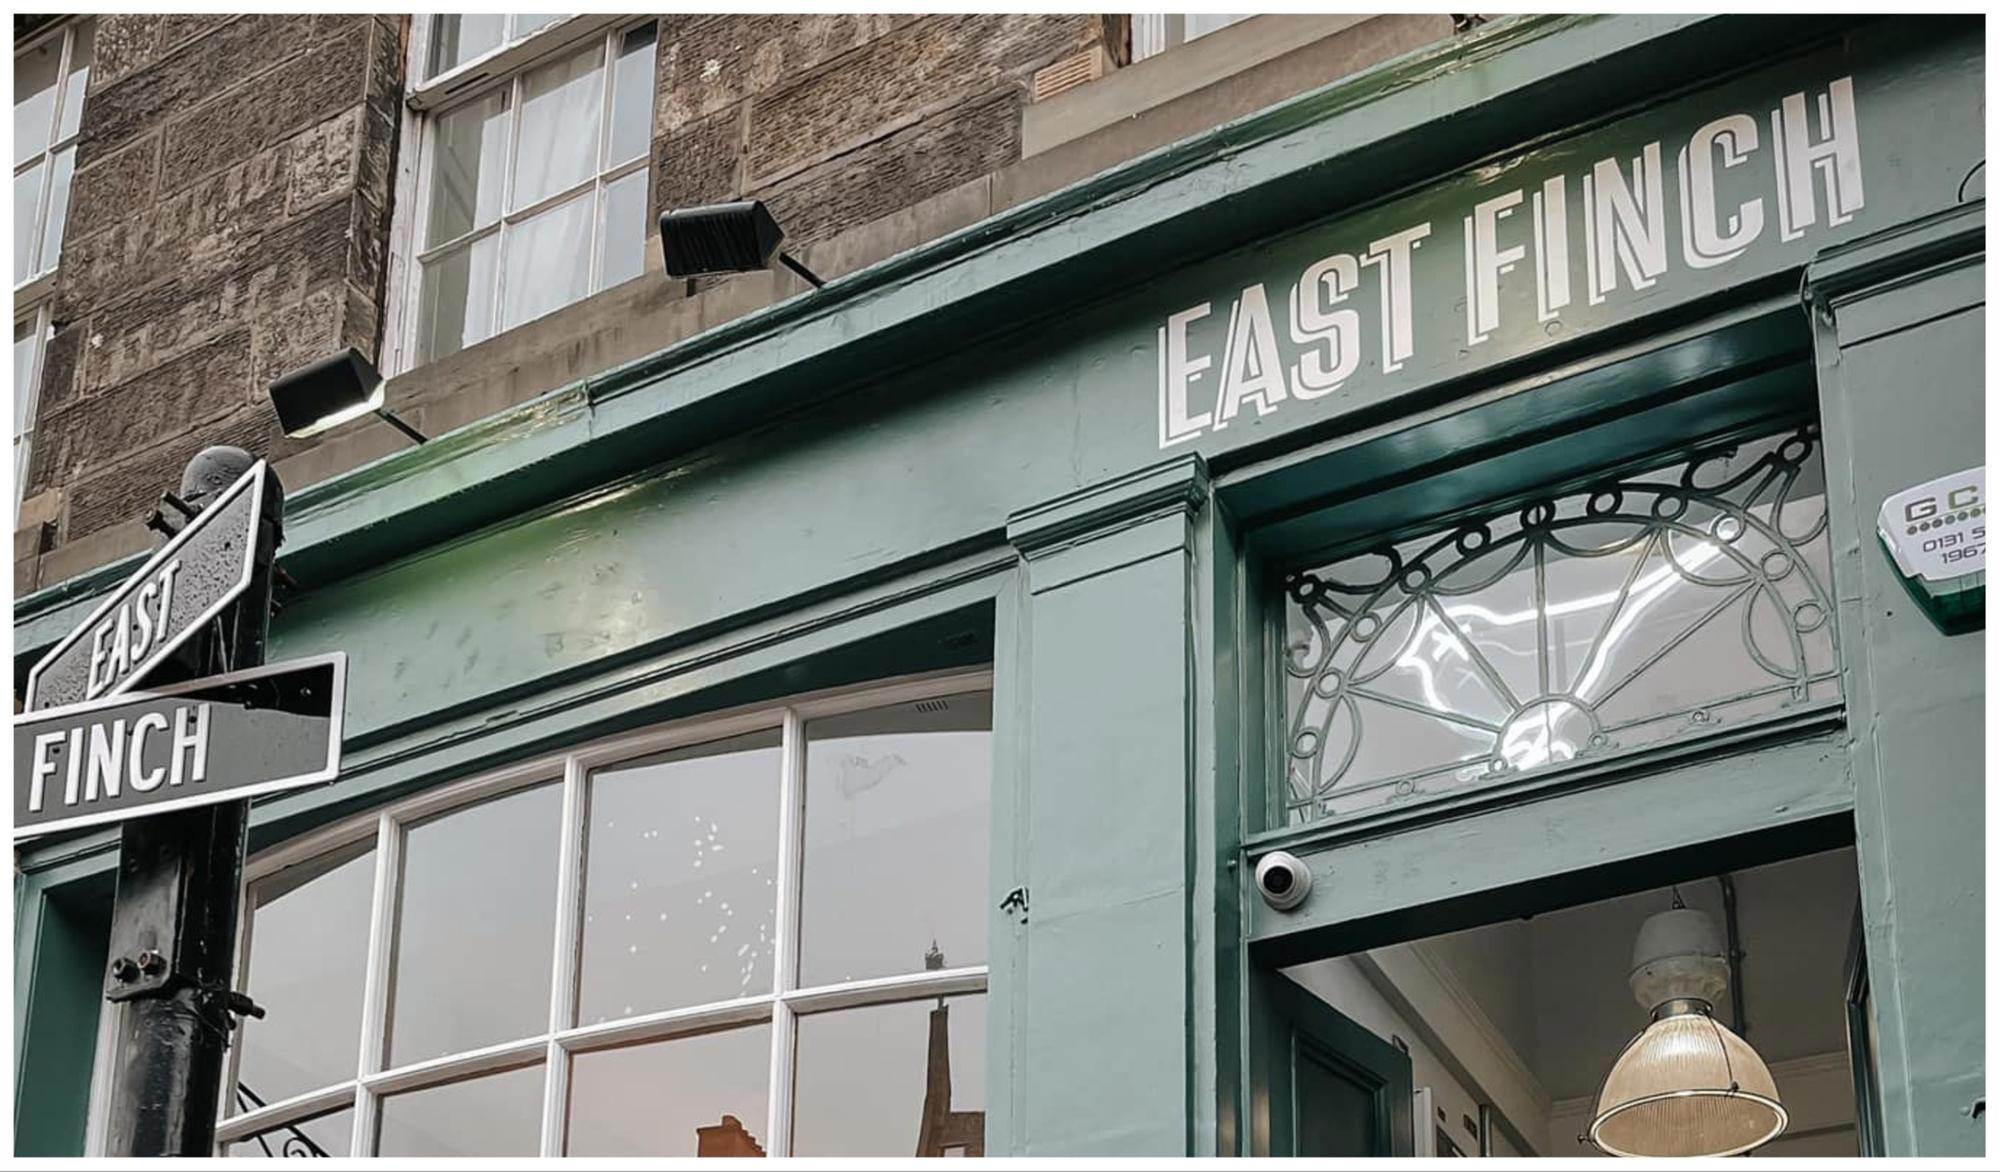 Popular Edinburgh City Centre Bar And Restaurant East Finch Announces Sudden Closure